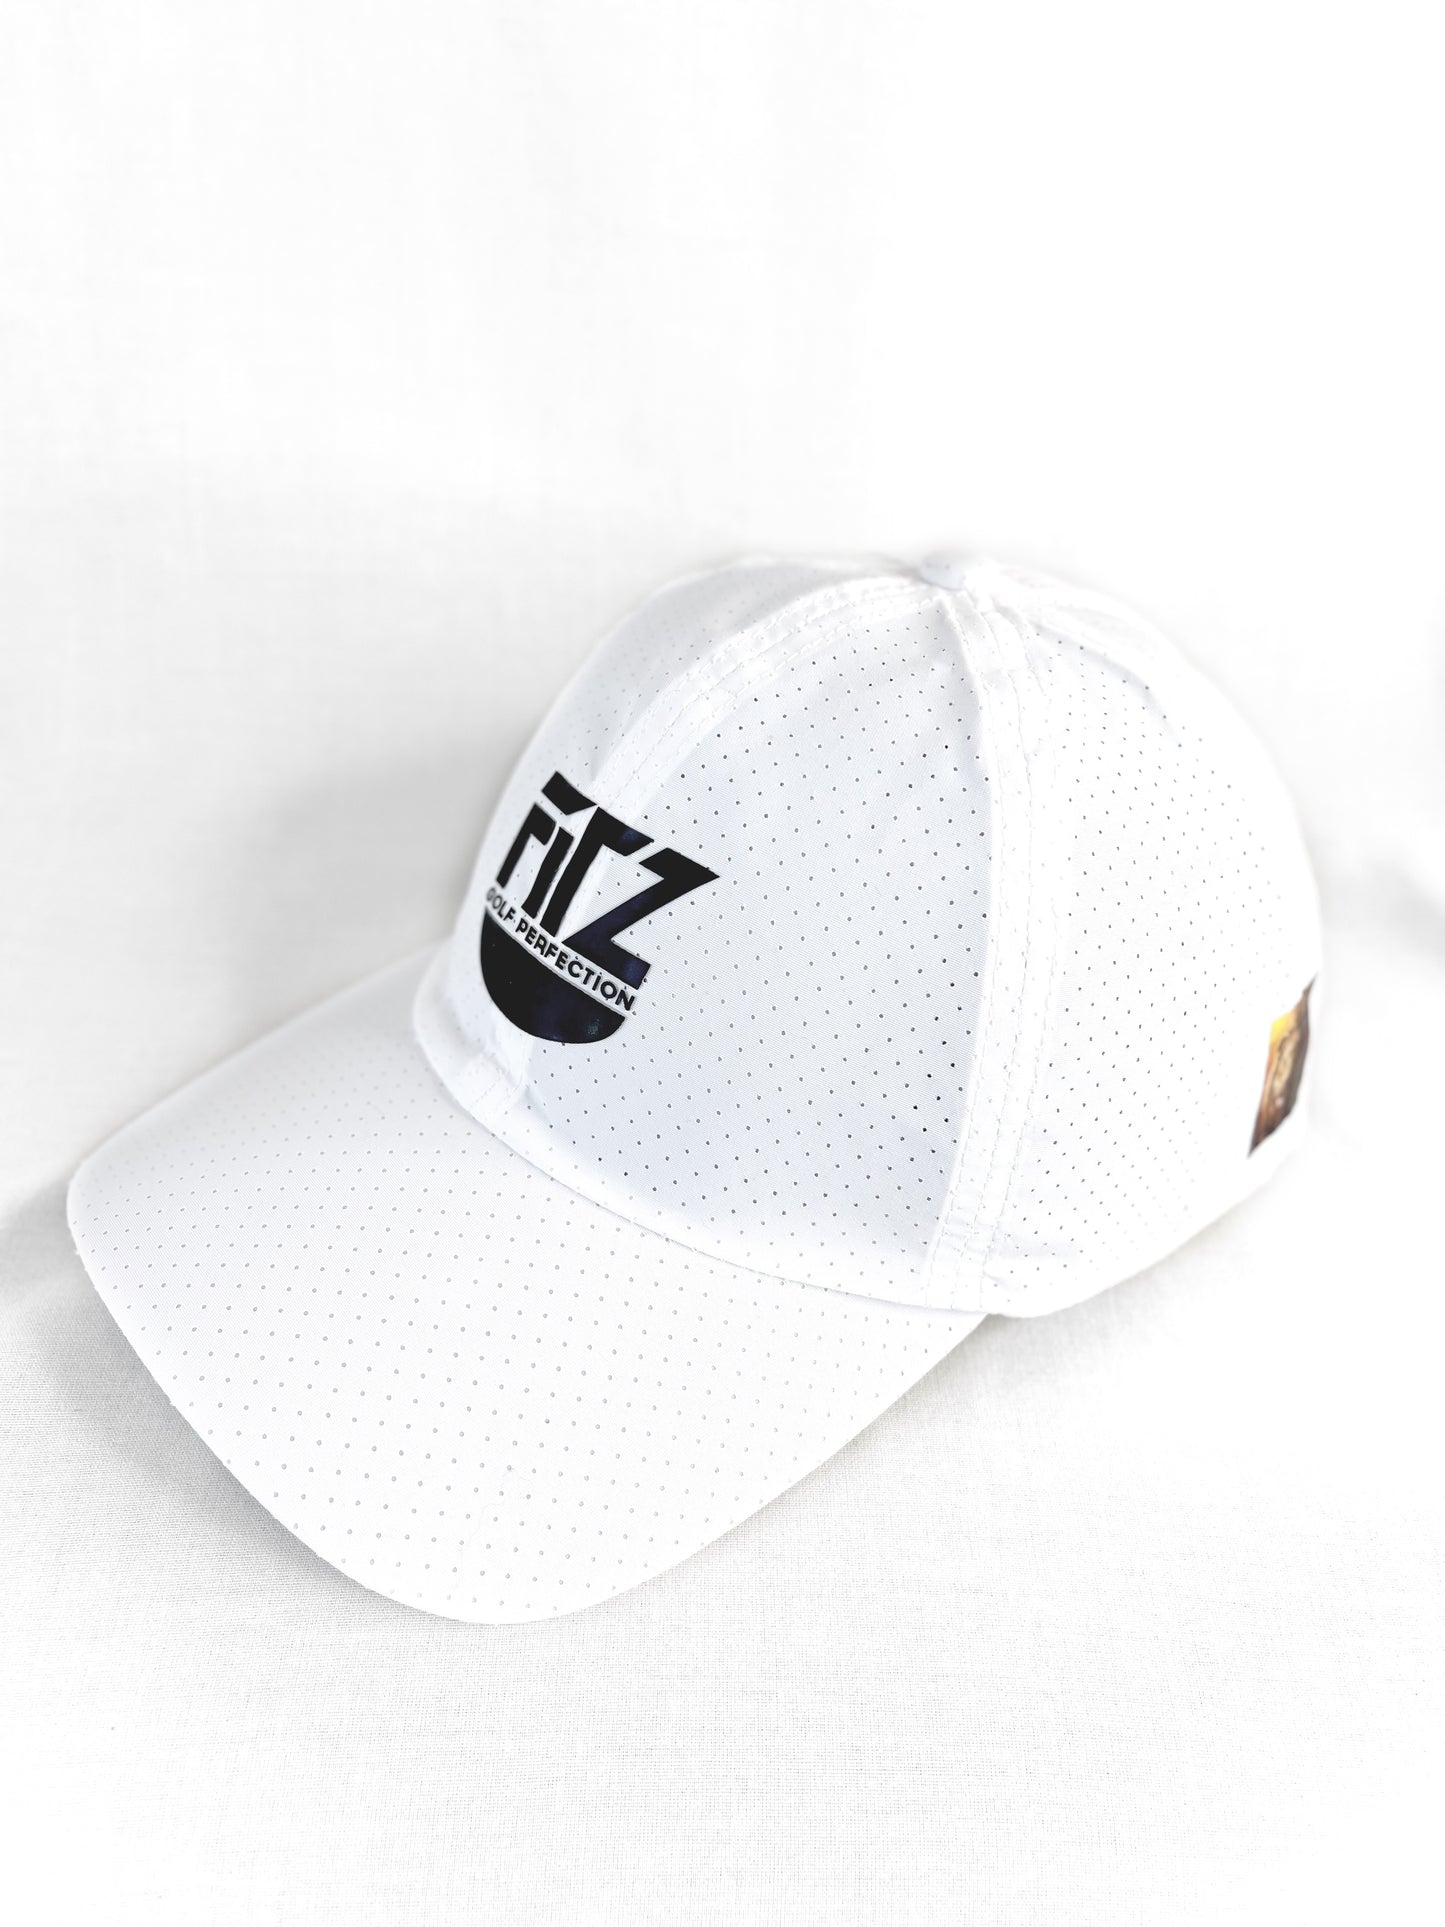 FitzOne White Sports Mesh Hat (Black Logo)